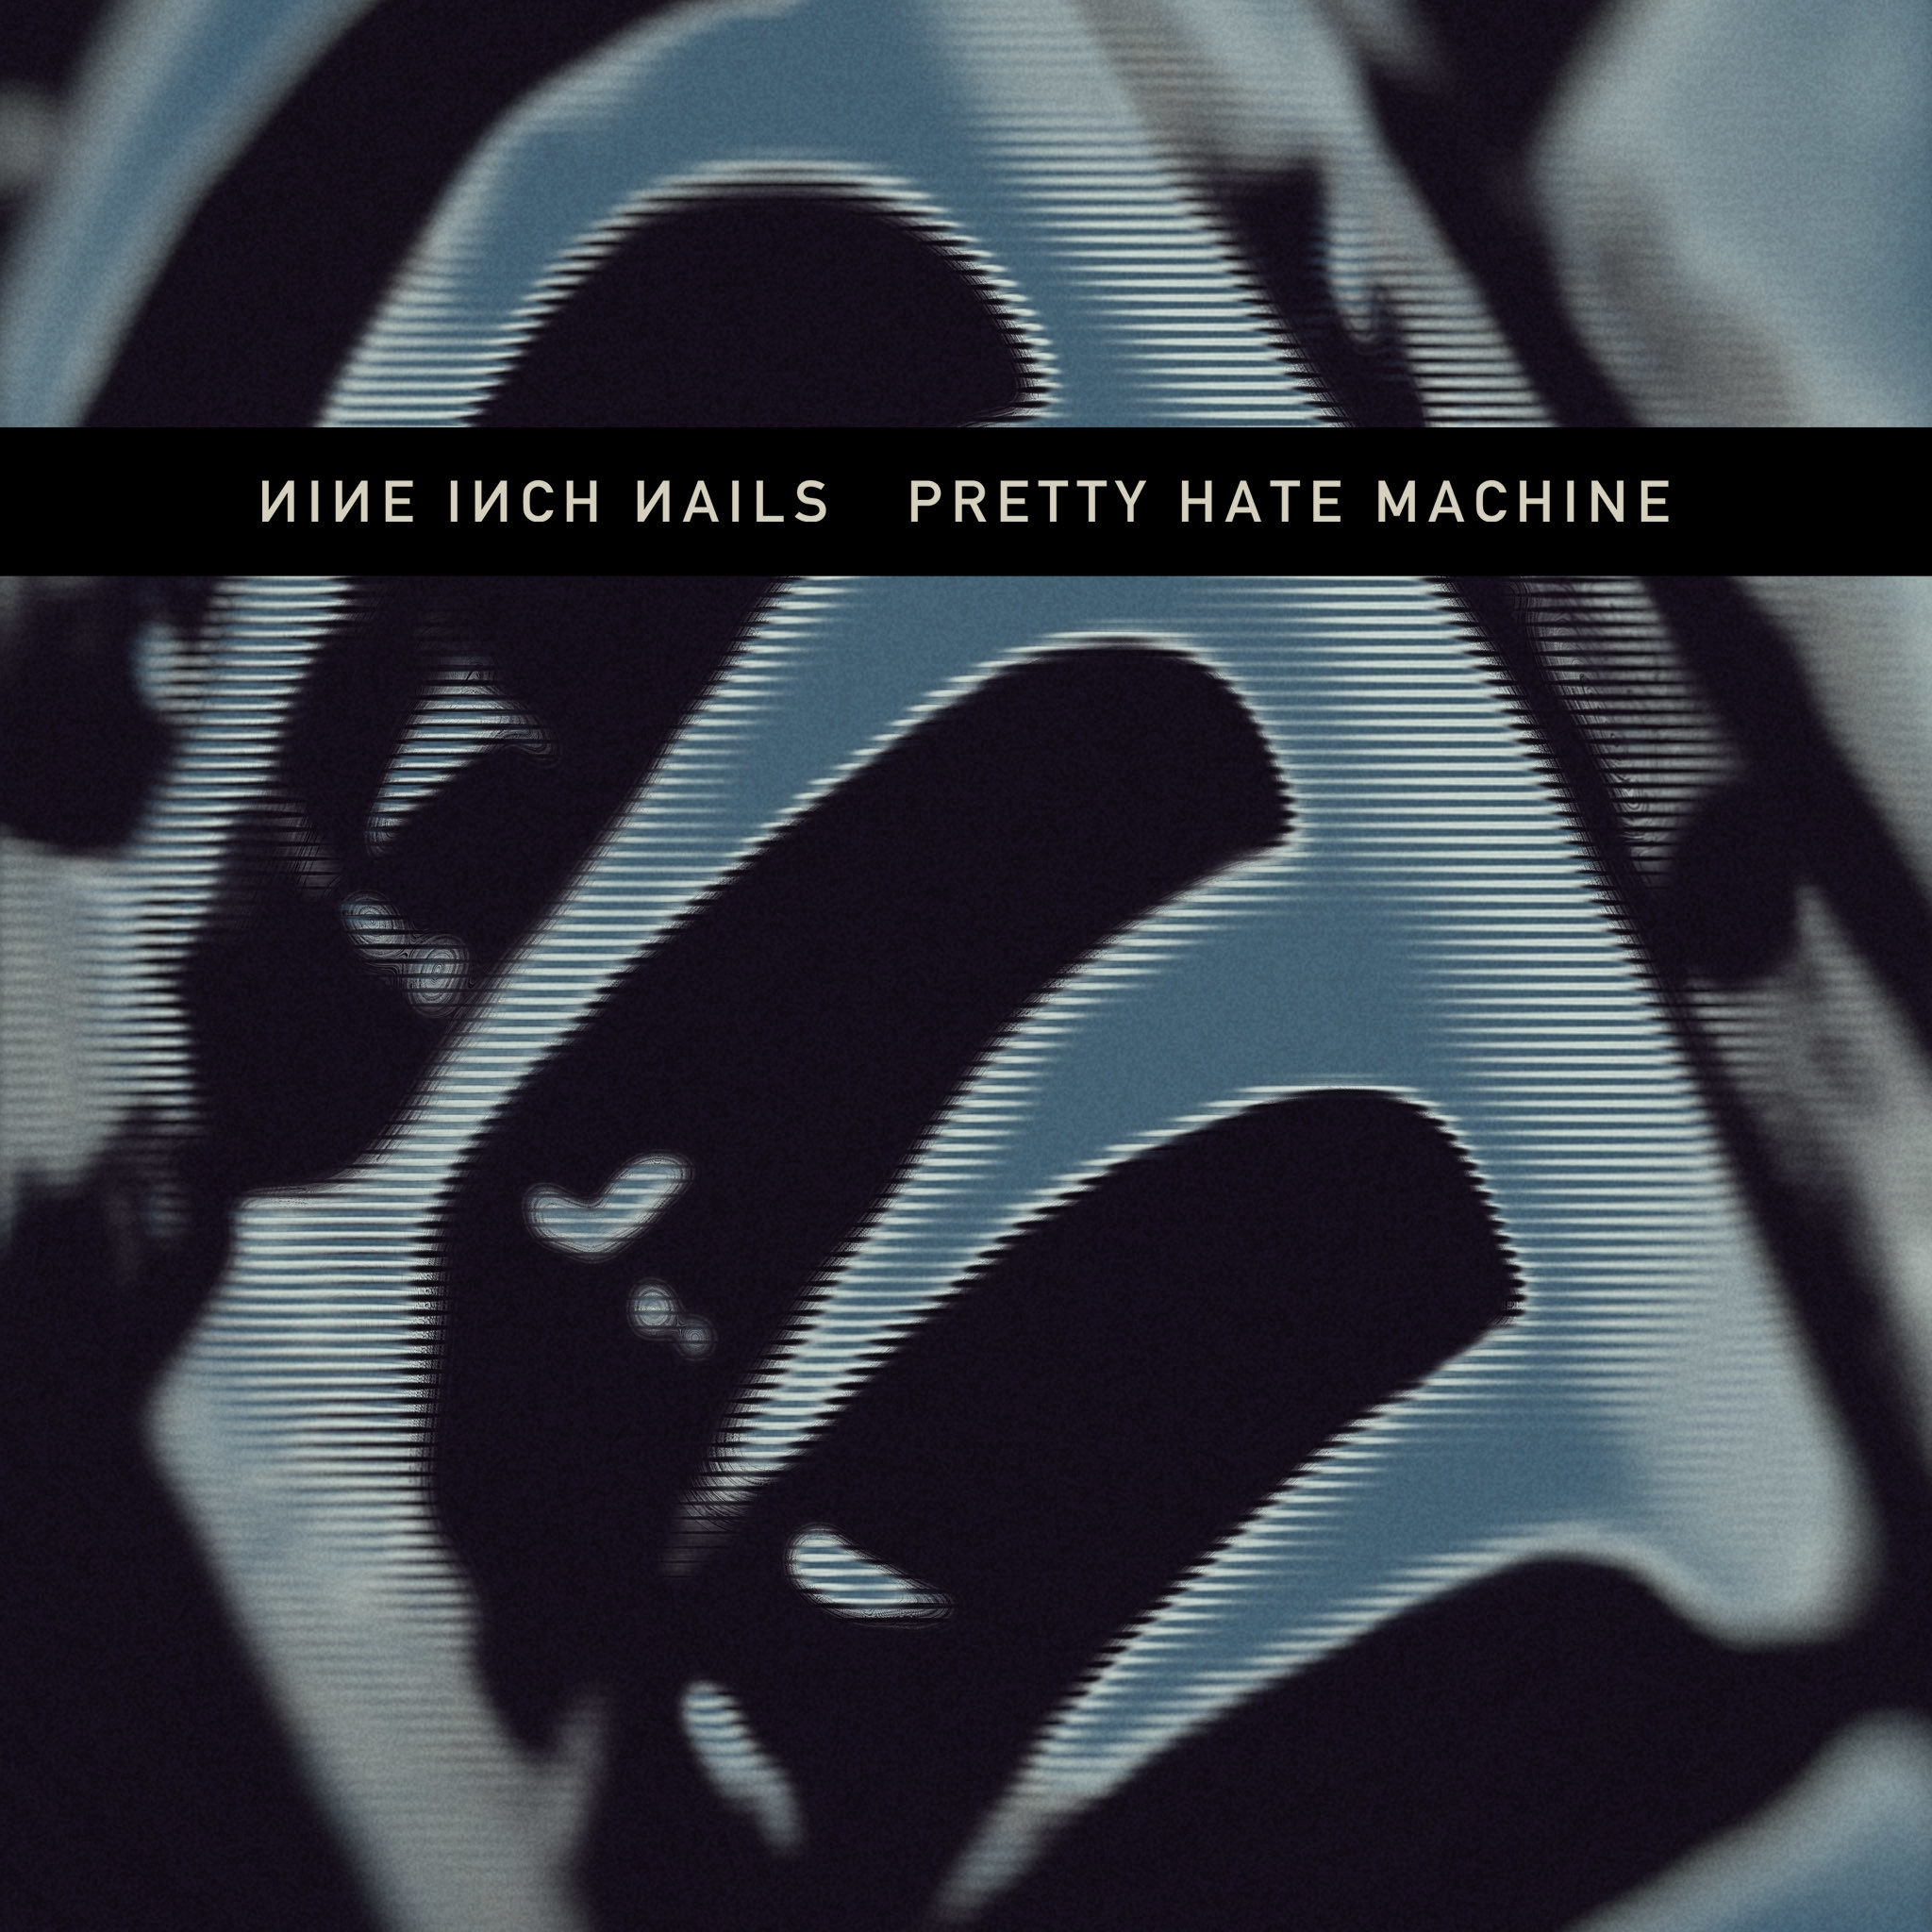 2048x2048 Nine Inch Nails "Pretty Hate Machine" iPad retina wallpaper x Nail Design -  Nail Art Design